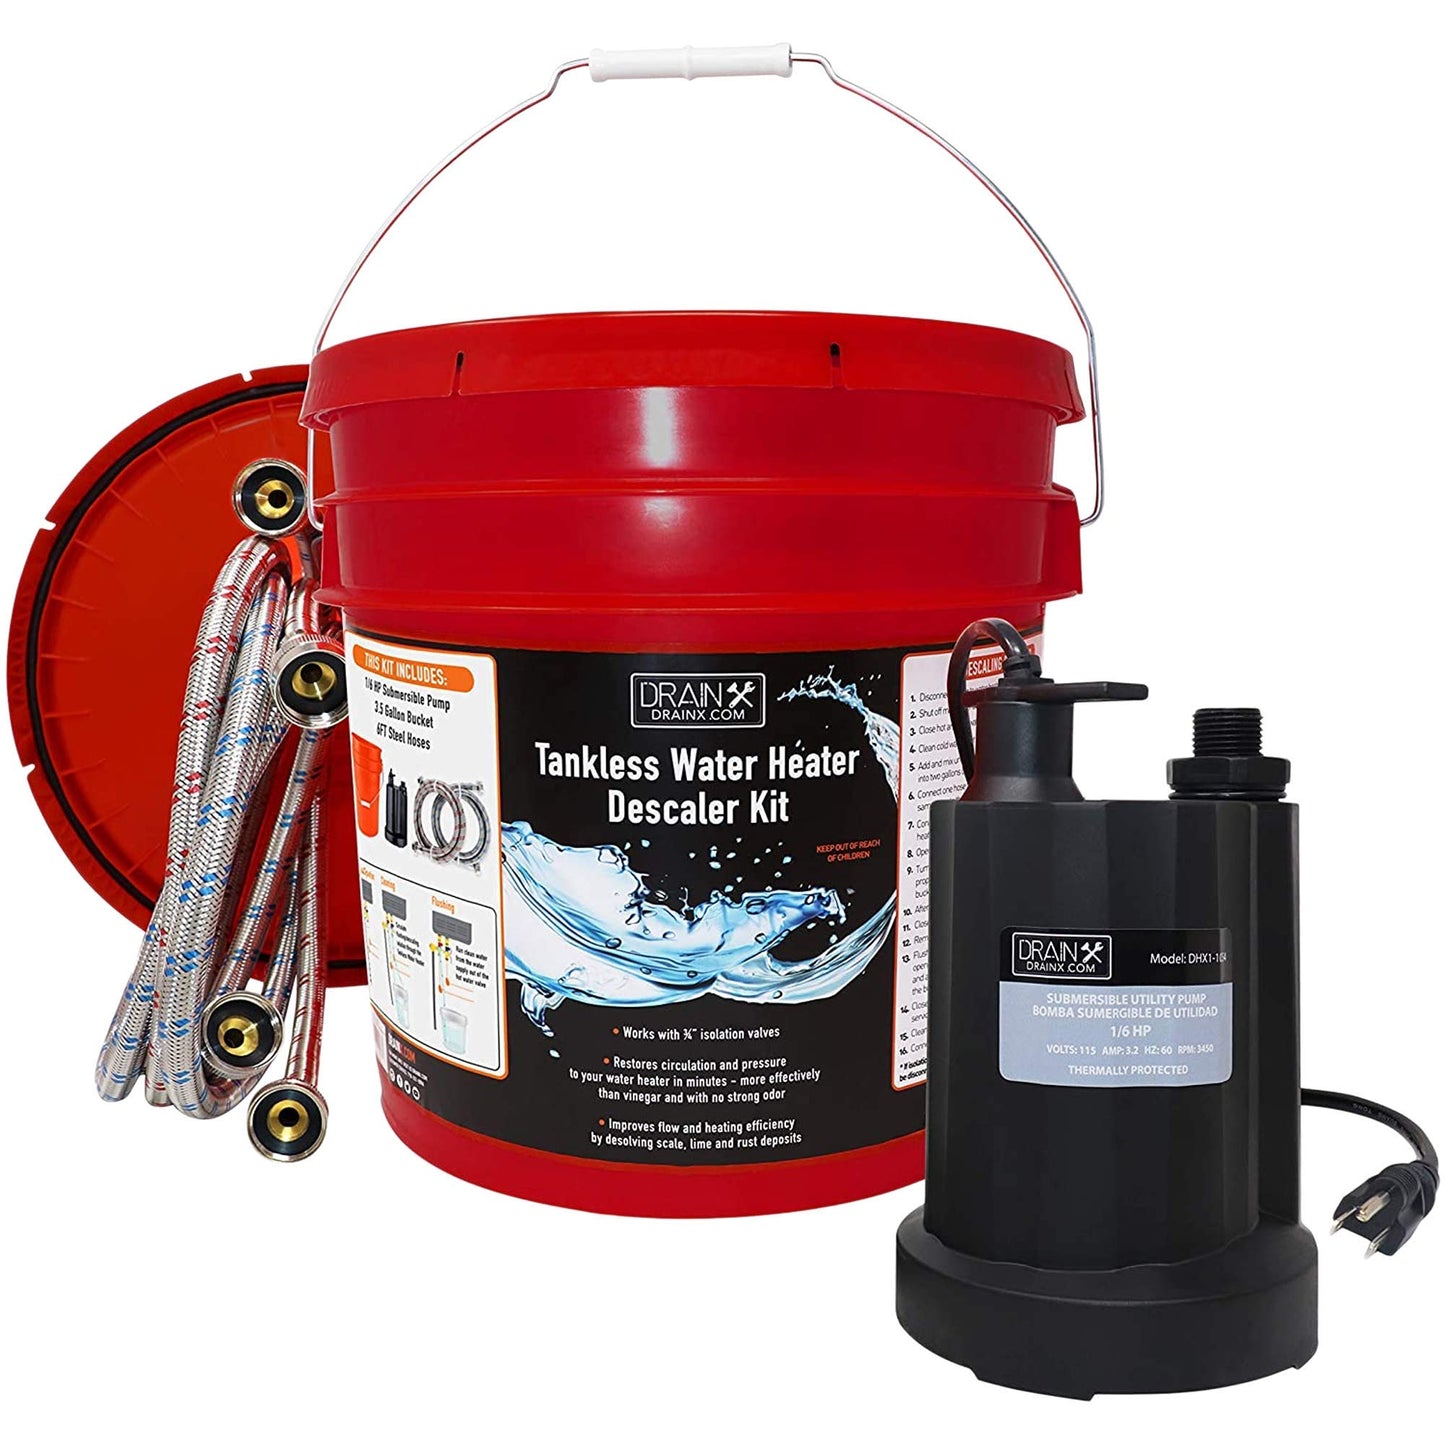 Tankless Water Heater Descaler Kit